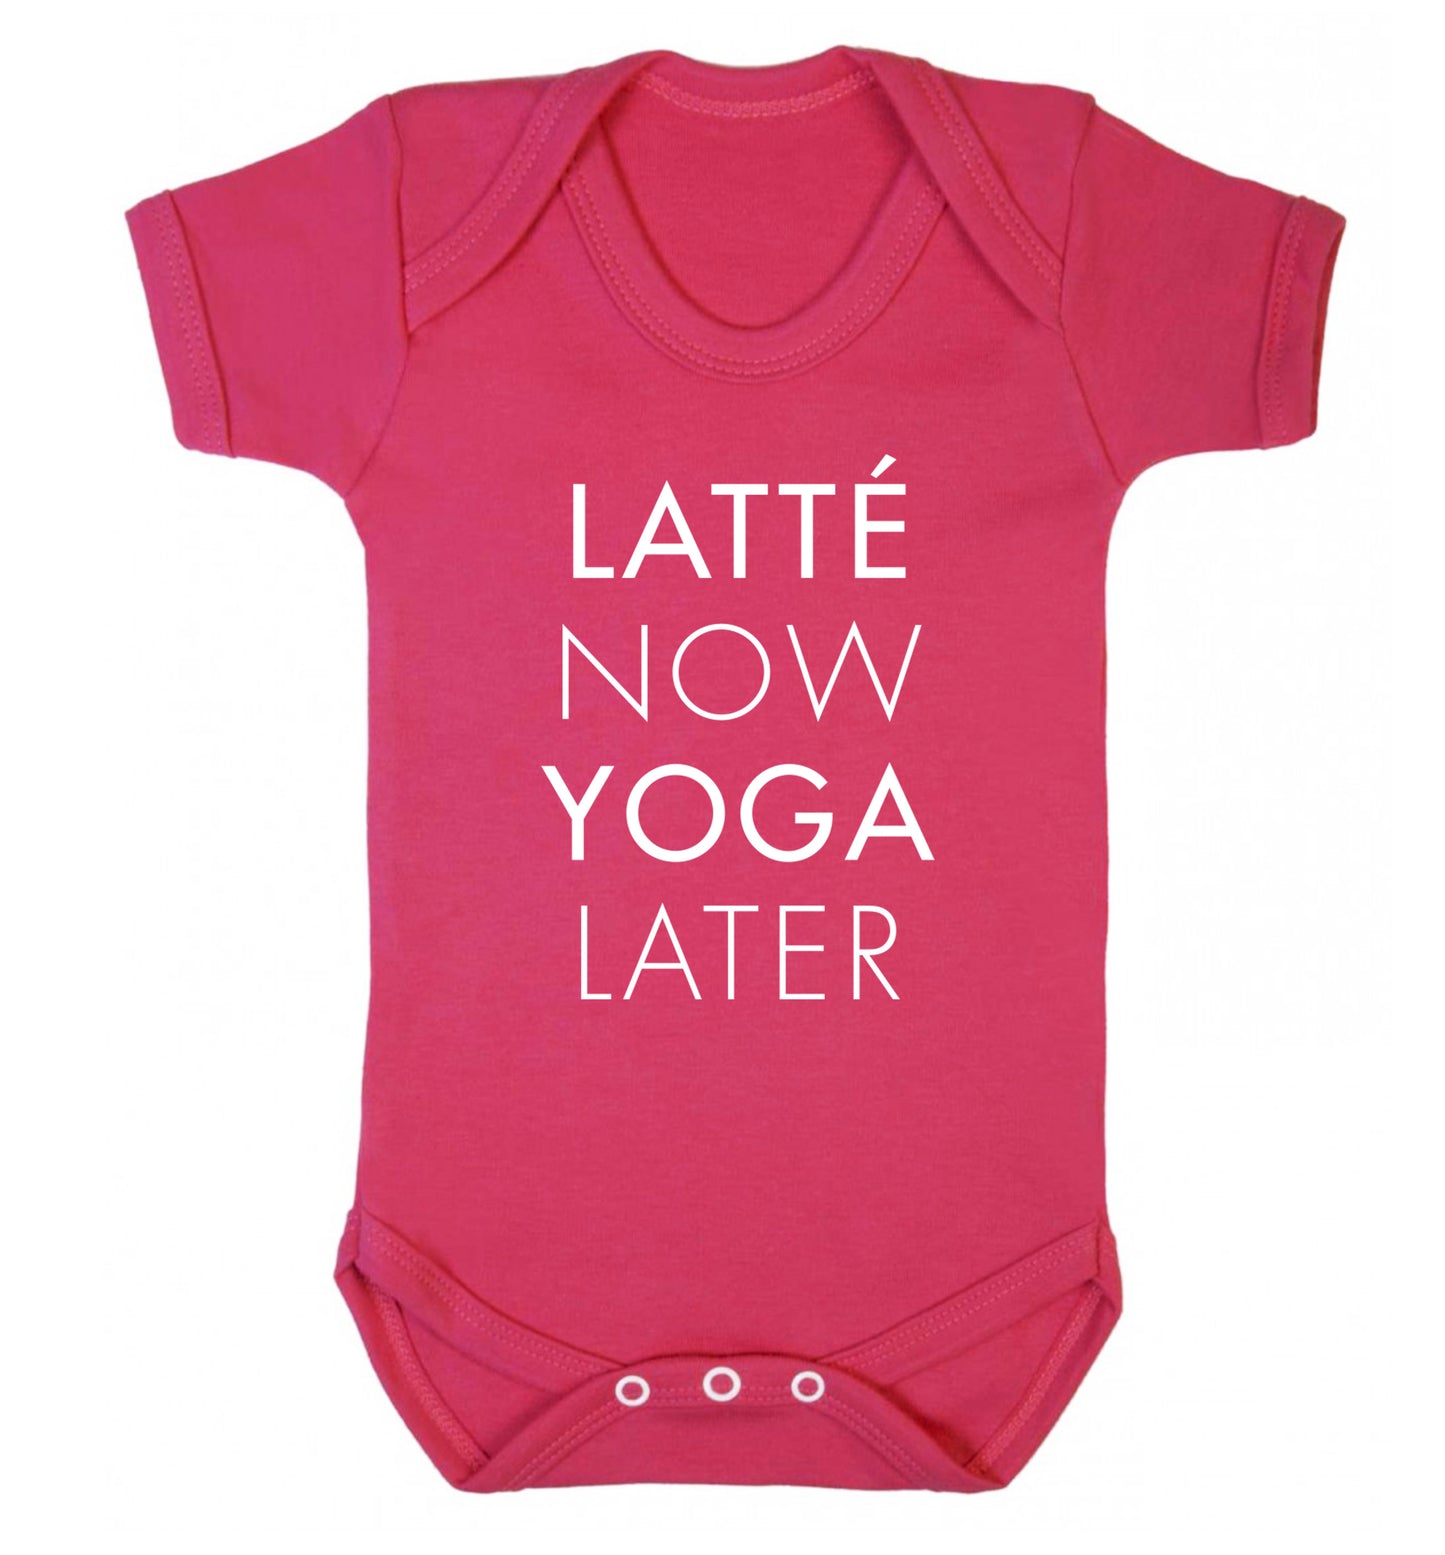 Latte now yoga later Baby Vest dark pink 18-24 months